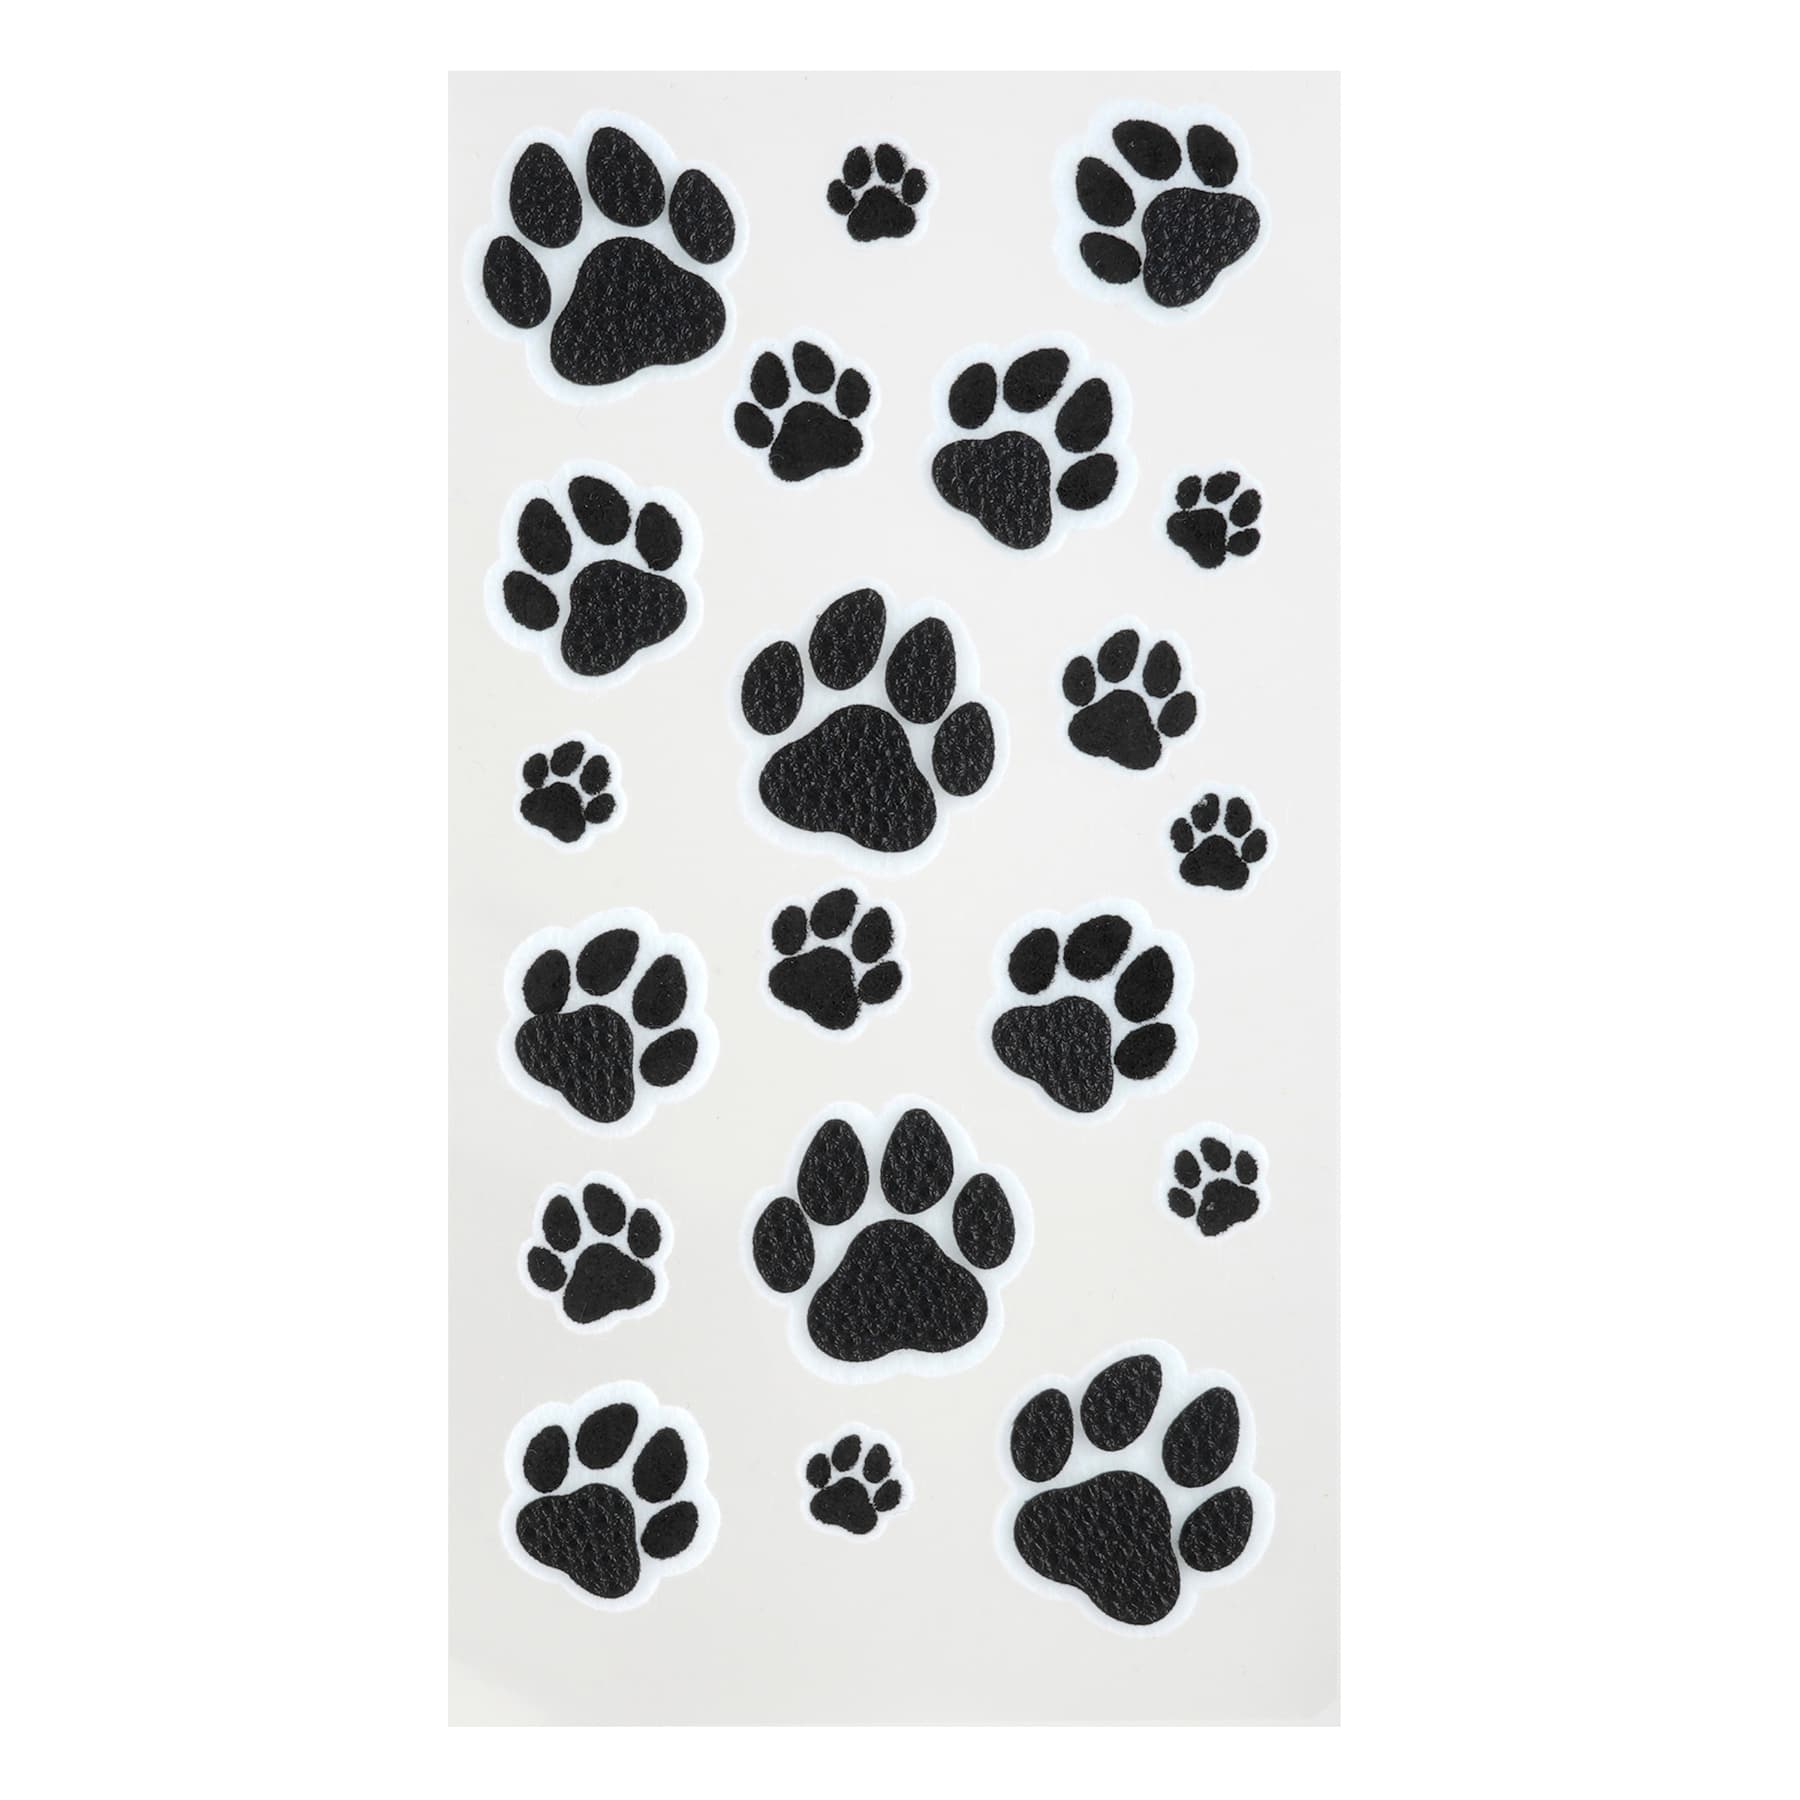 Dog Paw Print Wall Stencil by DeeSigns